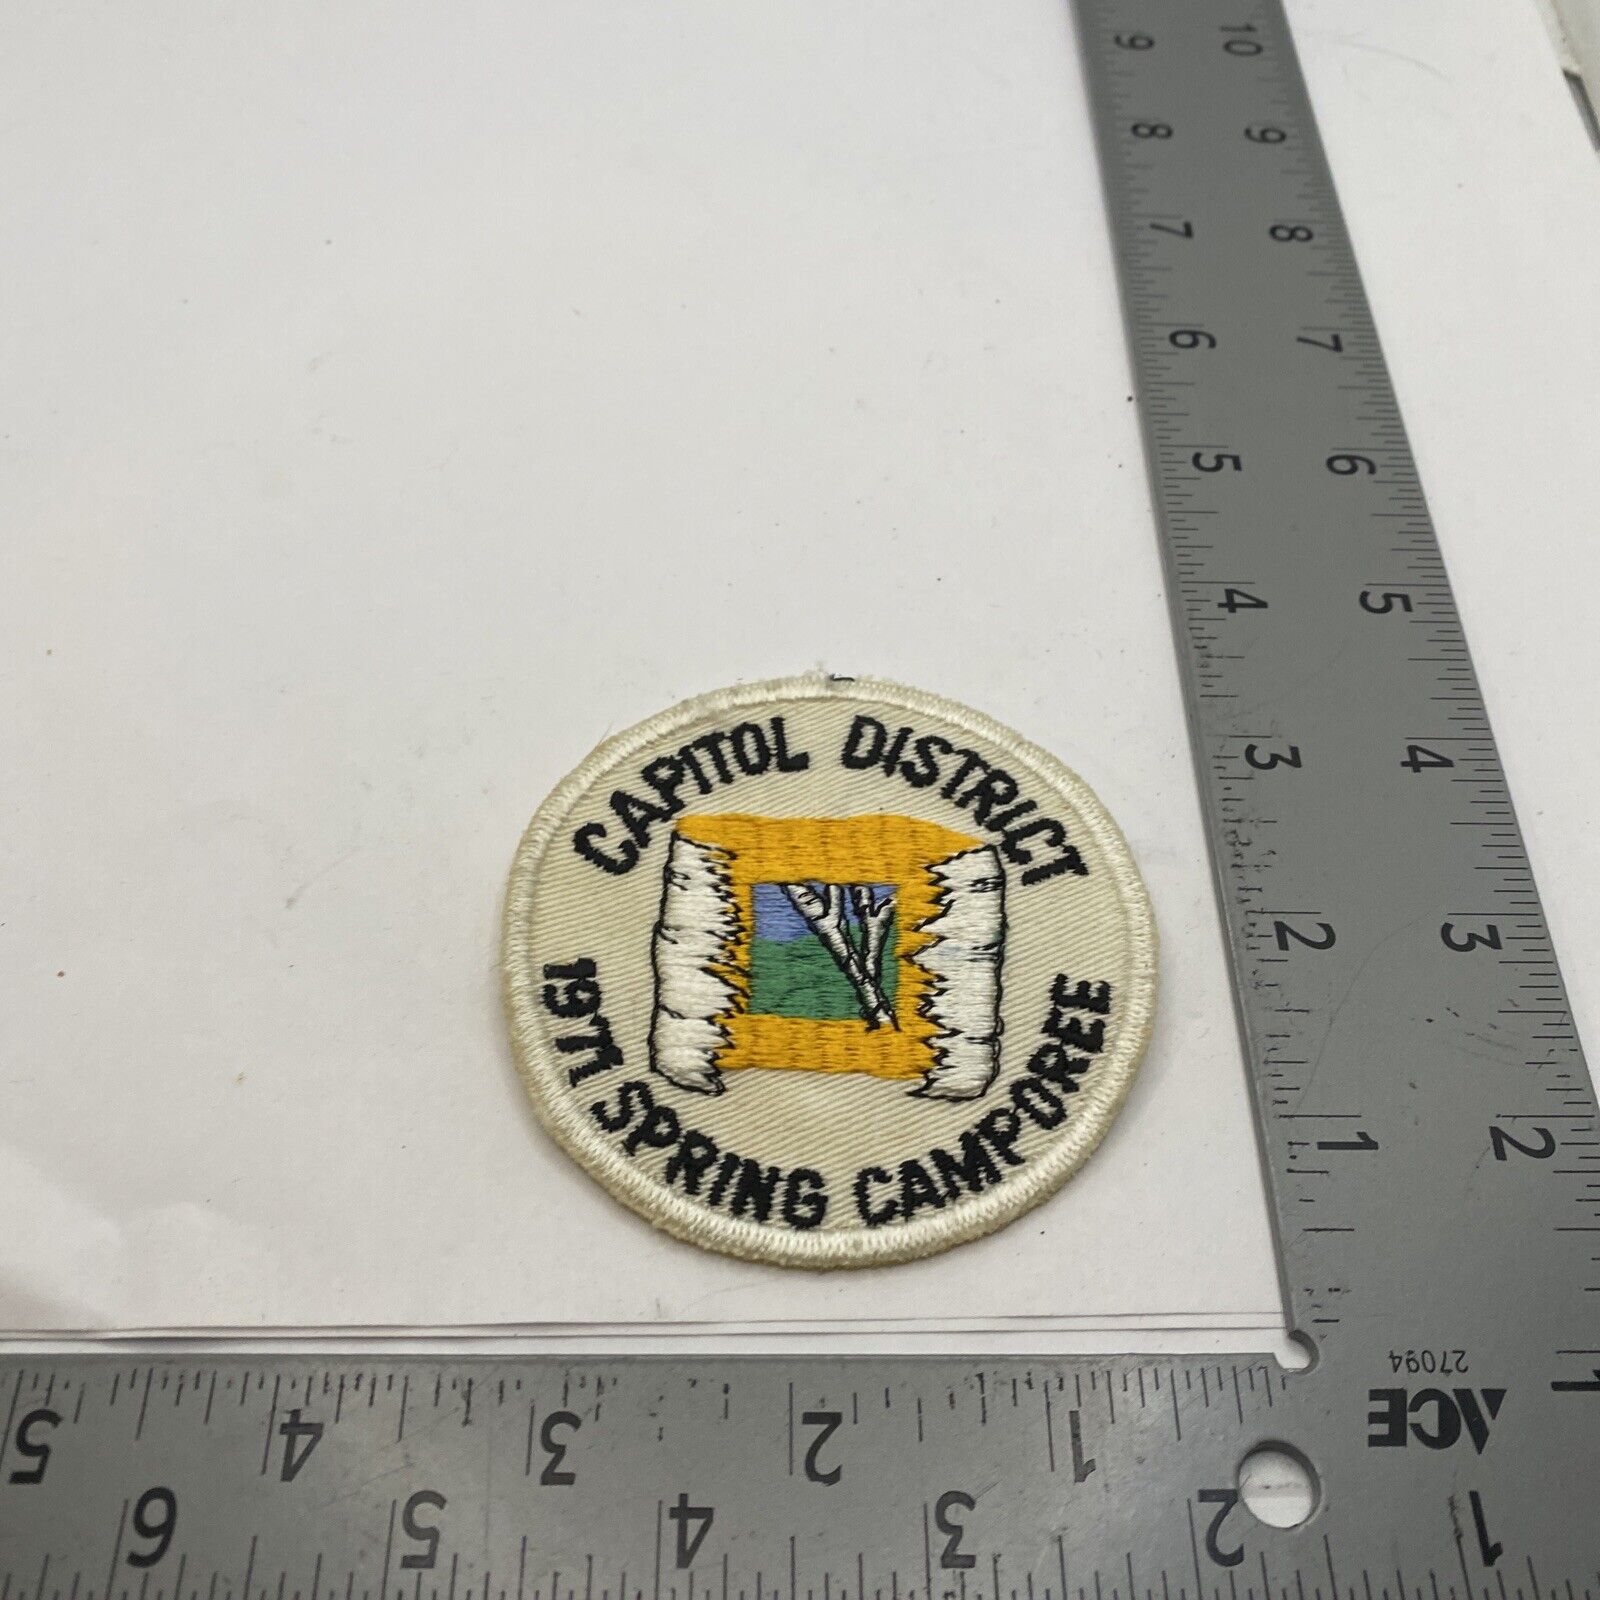 1971 Capitol District Spring Camporee patch BSA Boy Scouts 56D-1044B